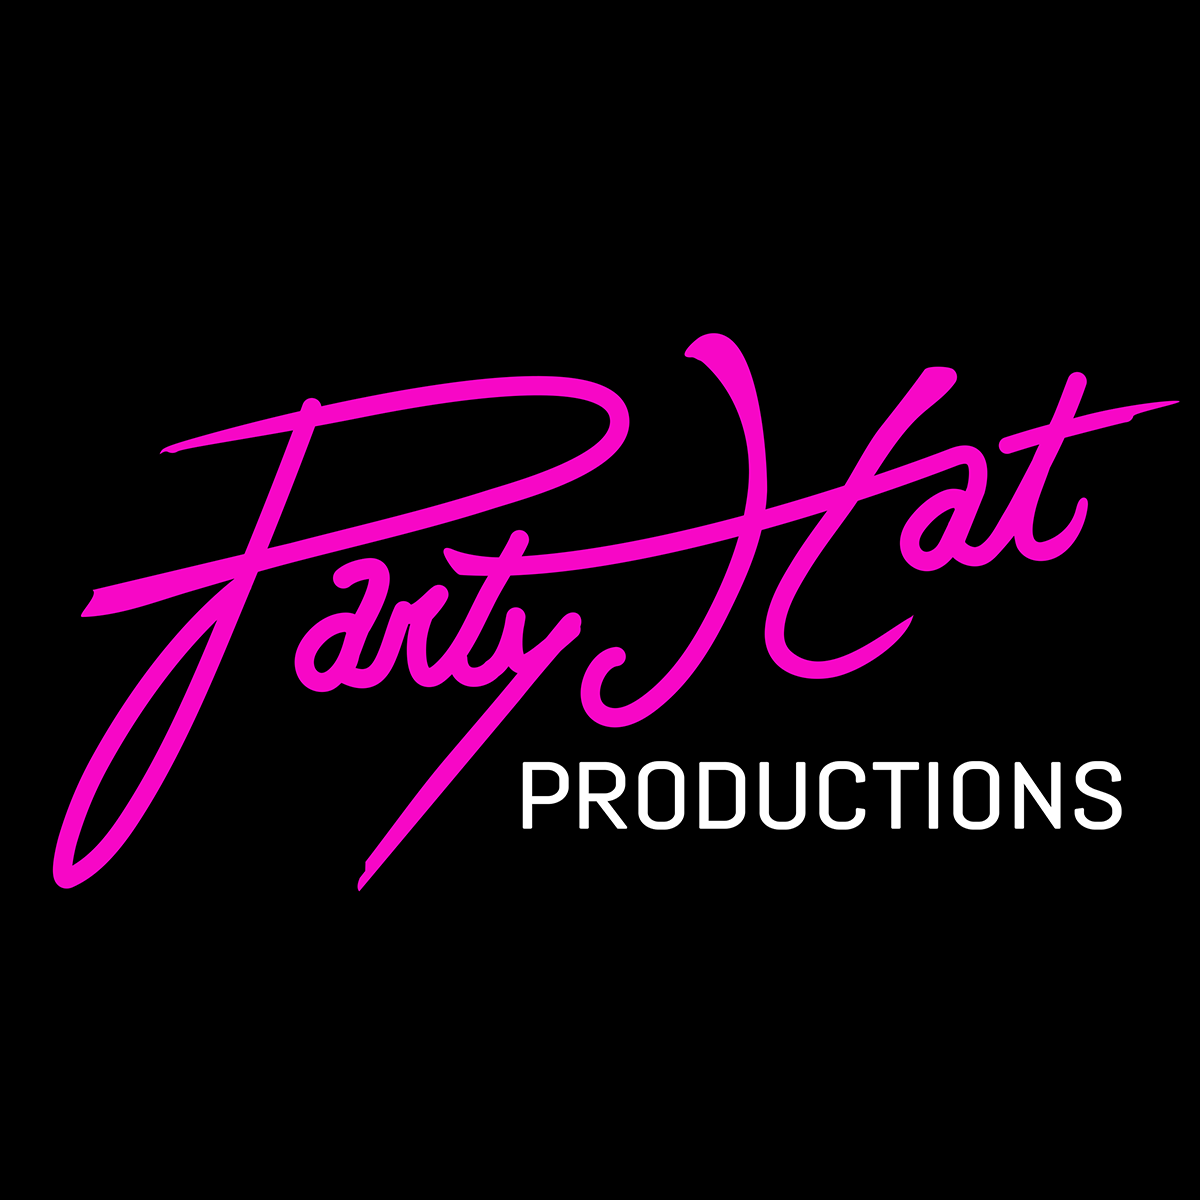 PartyHat Productions